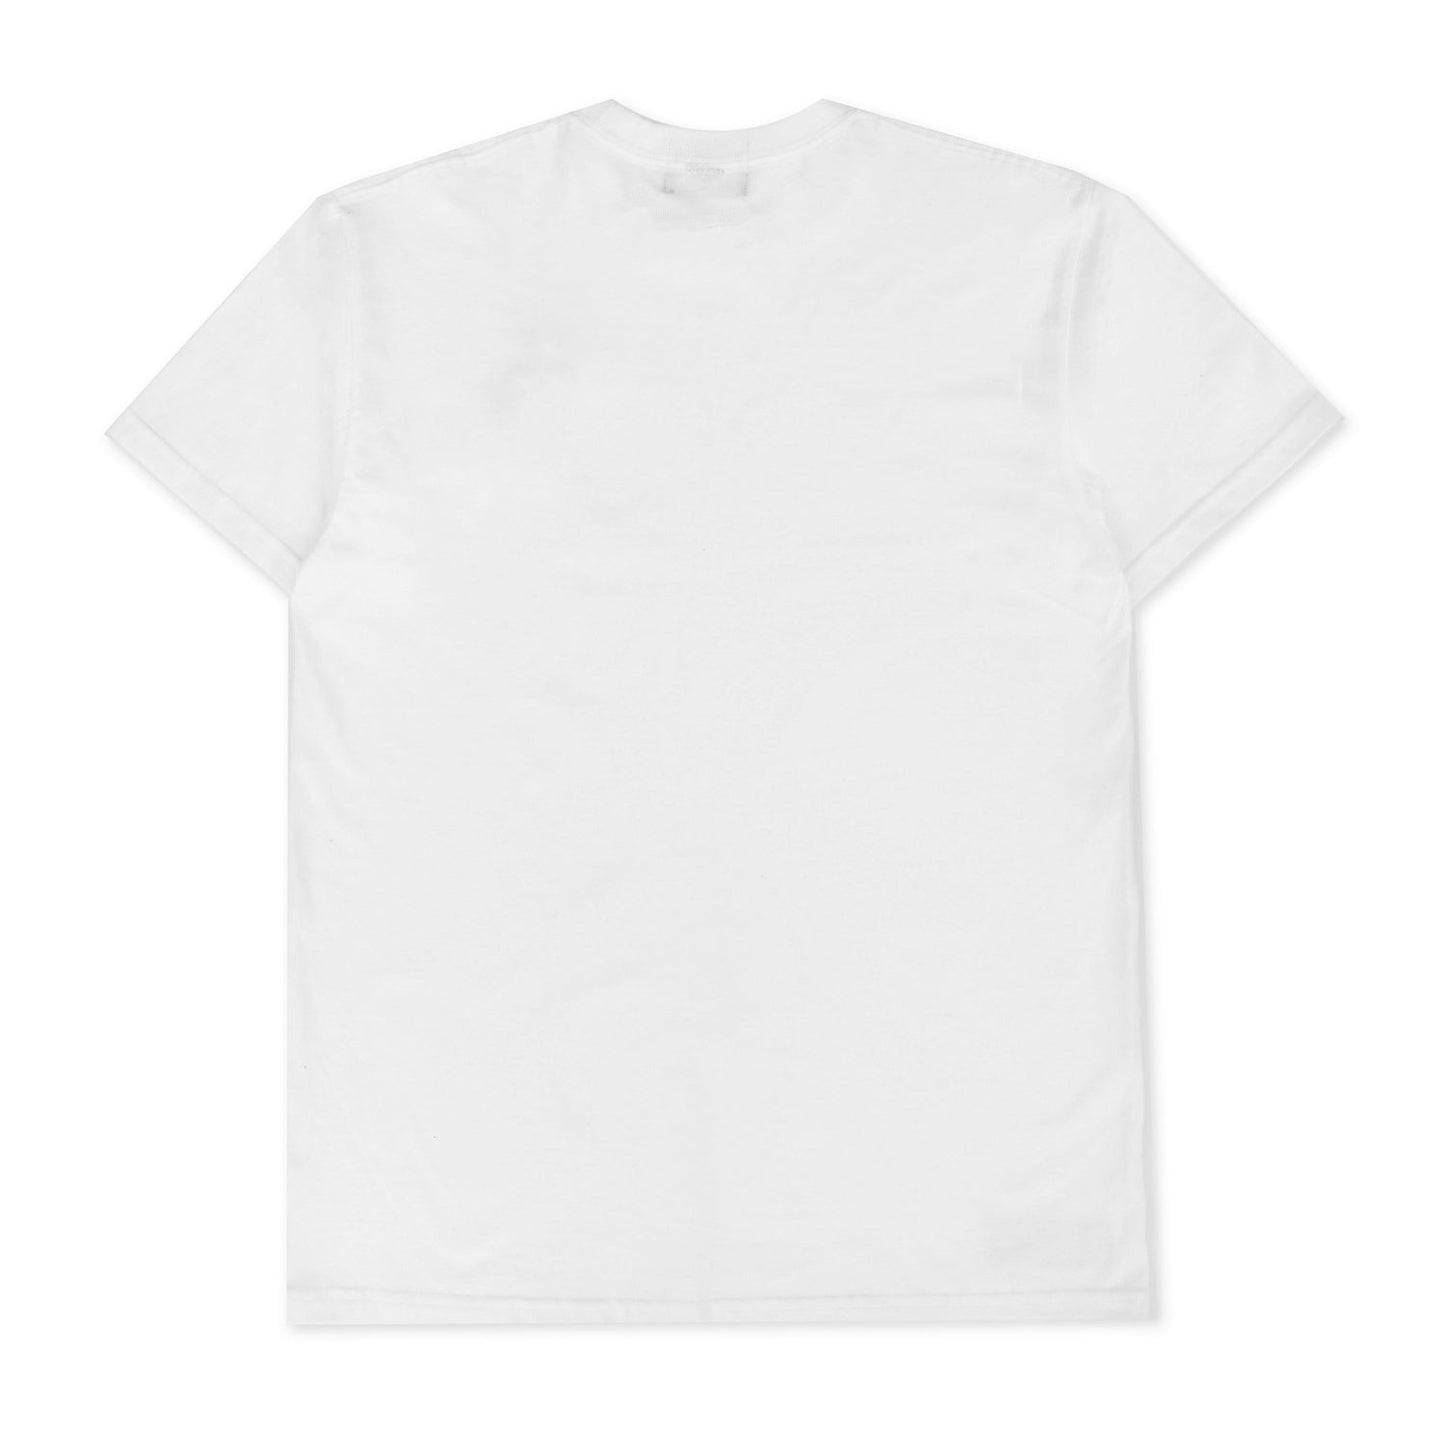 Prototype Tshirt - White